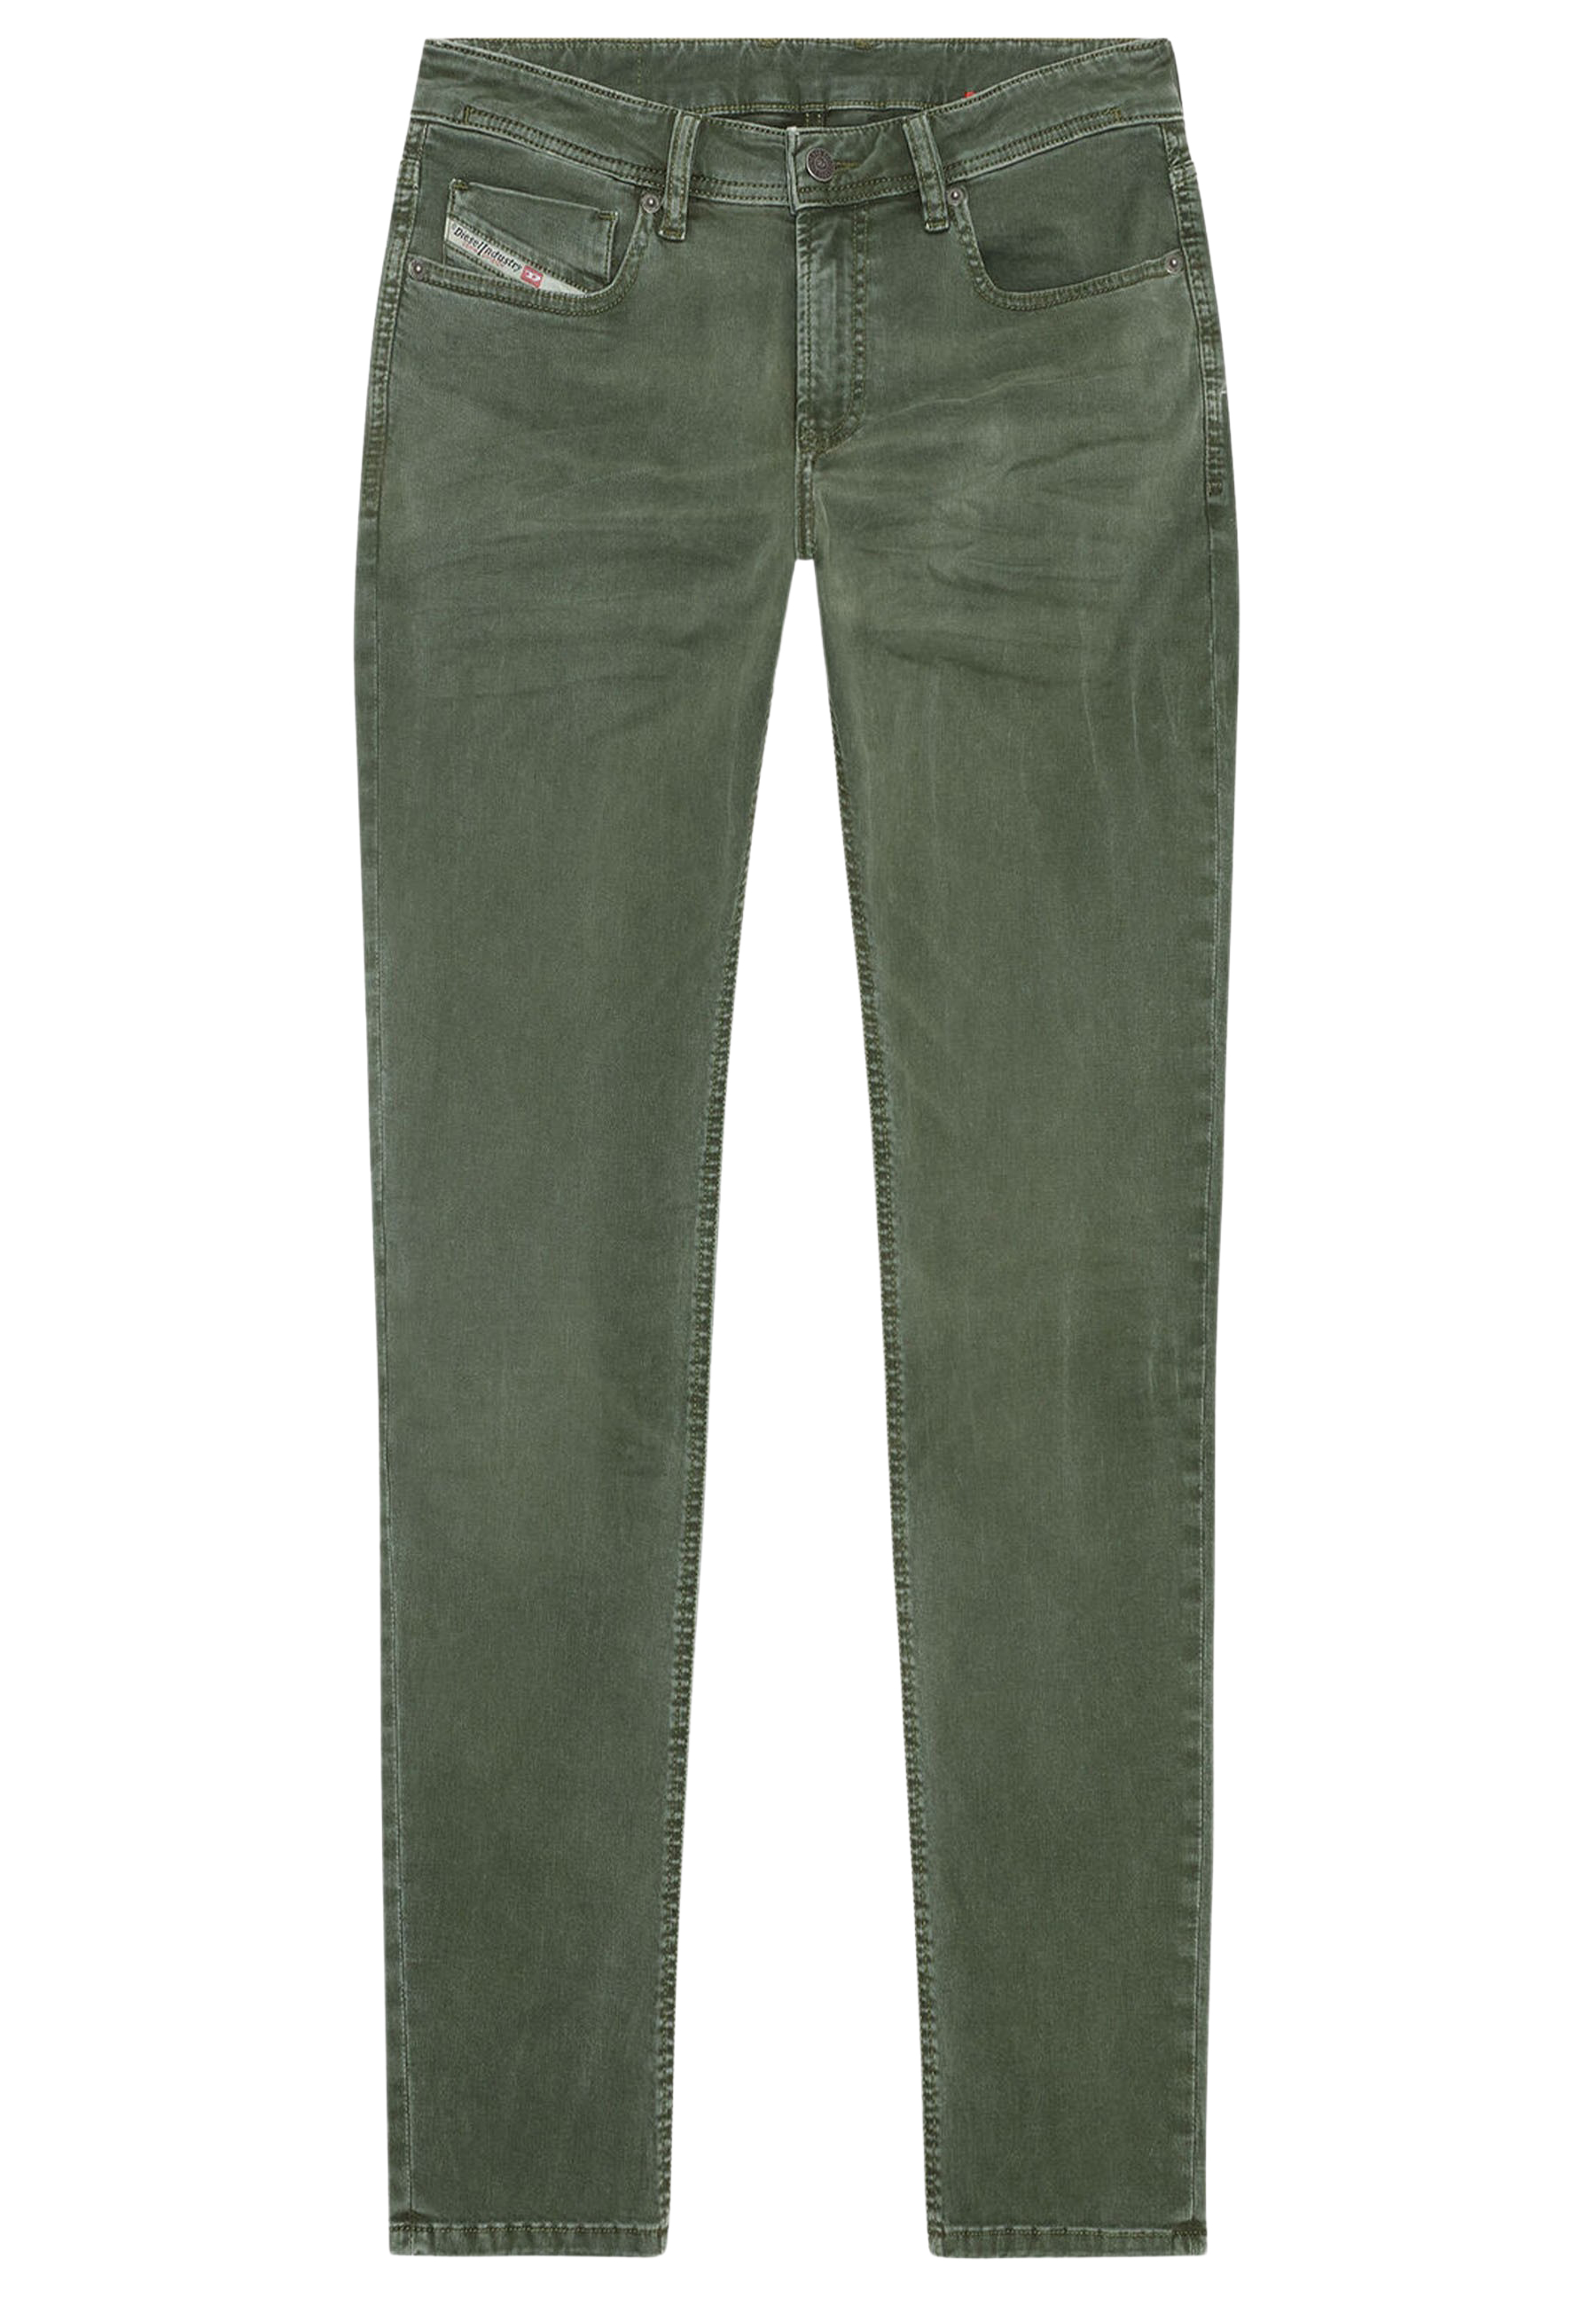 Diesel jeans groen Heren maat 34/34